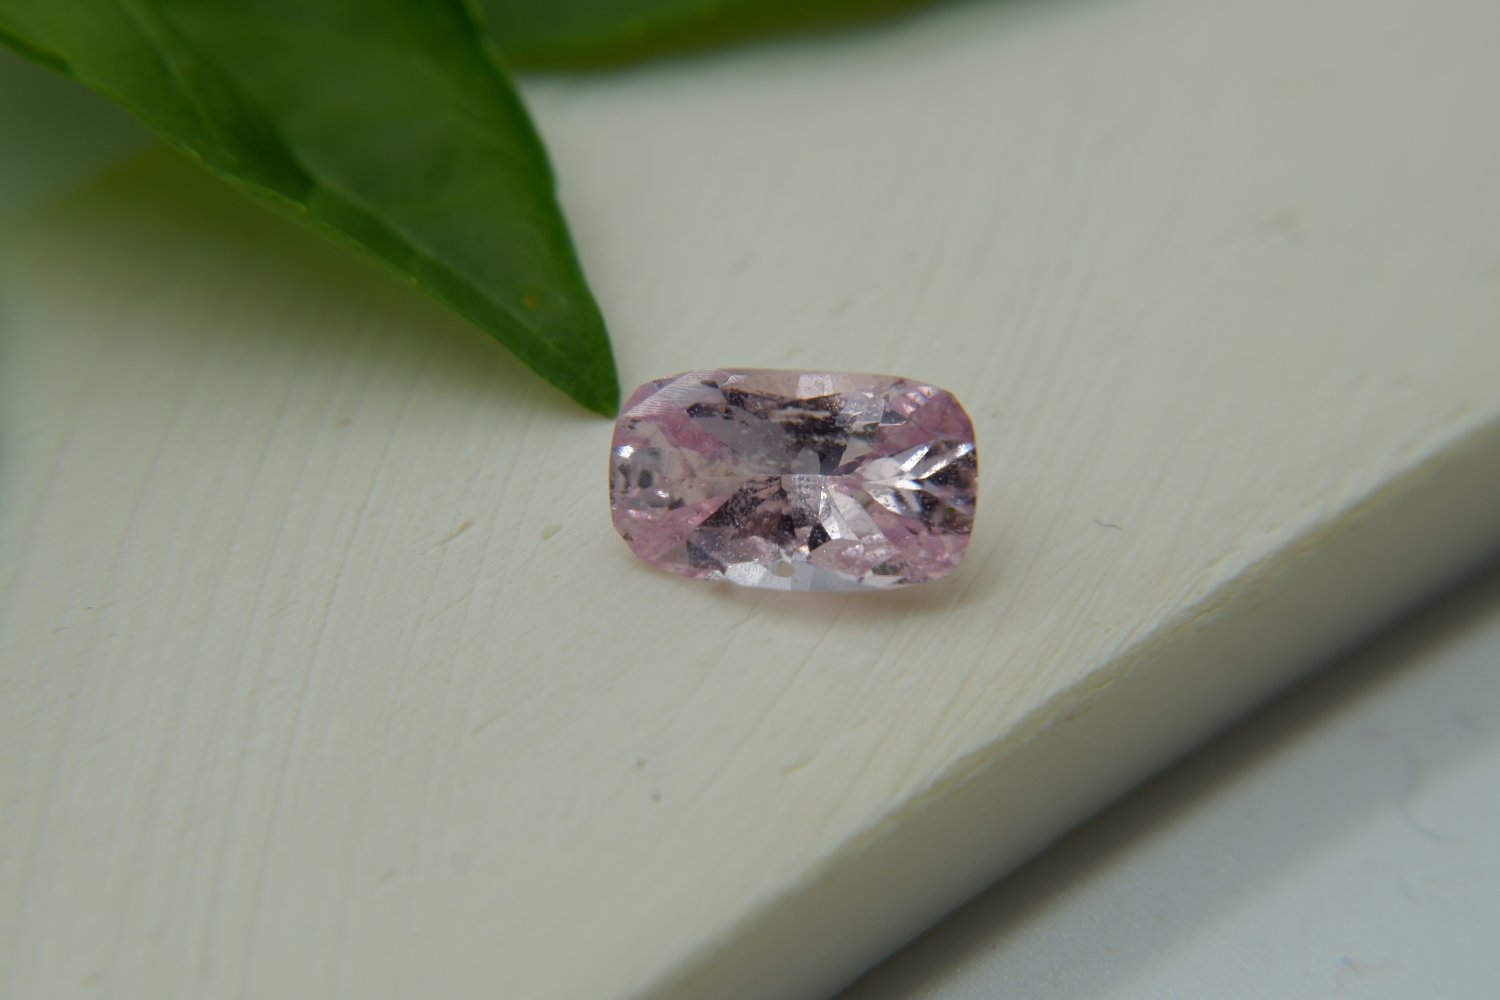  Pastel Pink Sapphire, design cut premium handcrafted rectangular cut with lustrous finish, rectangu